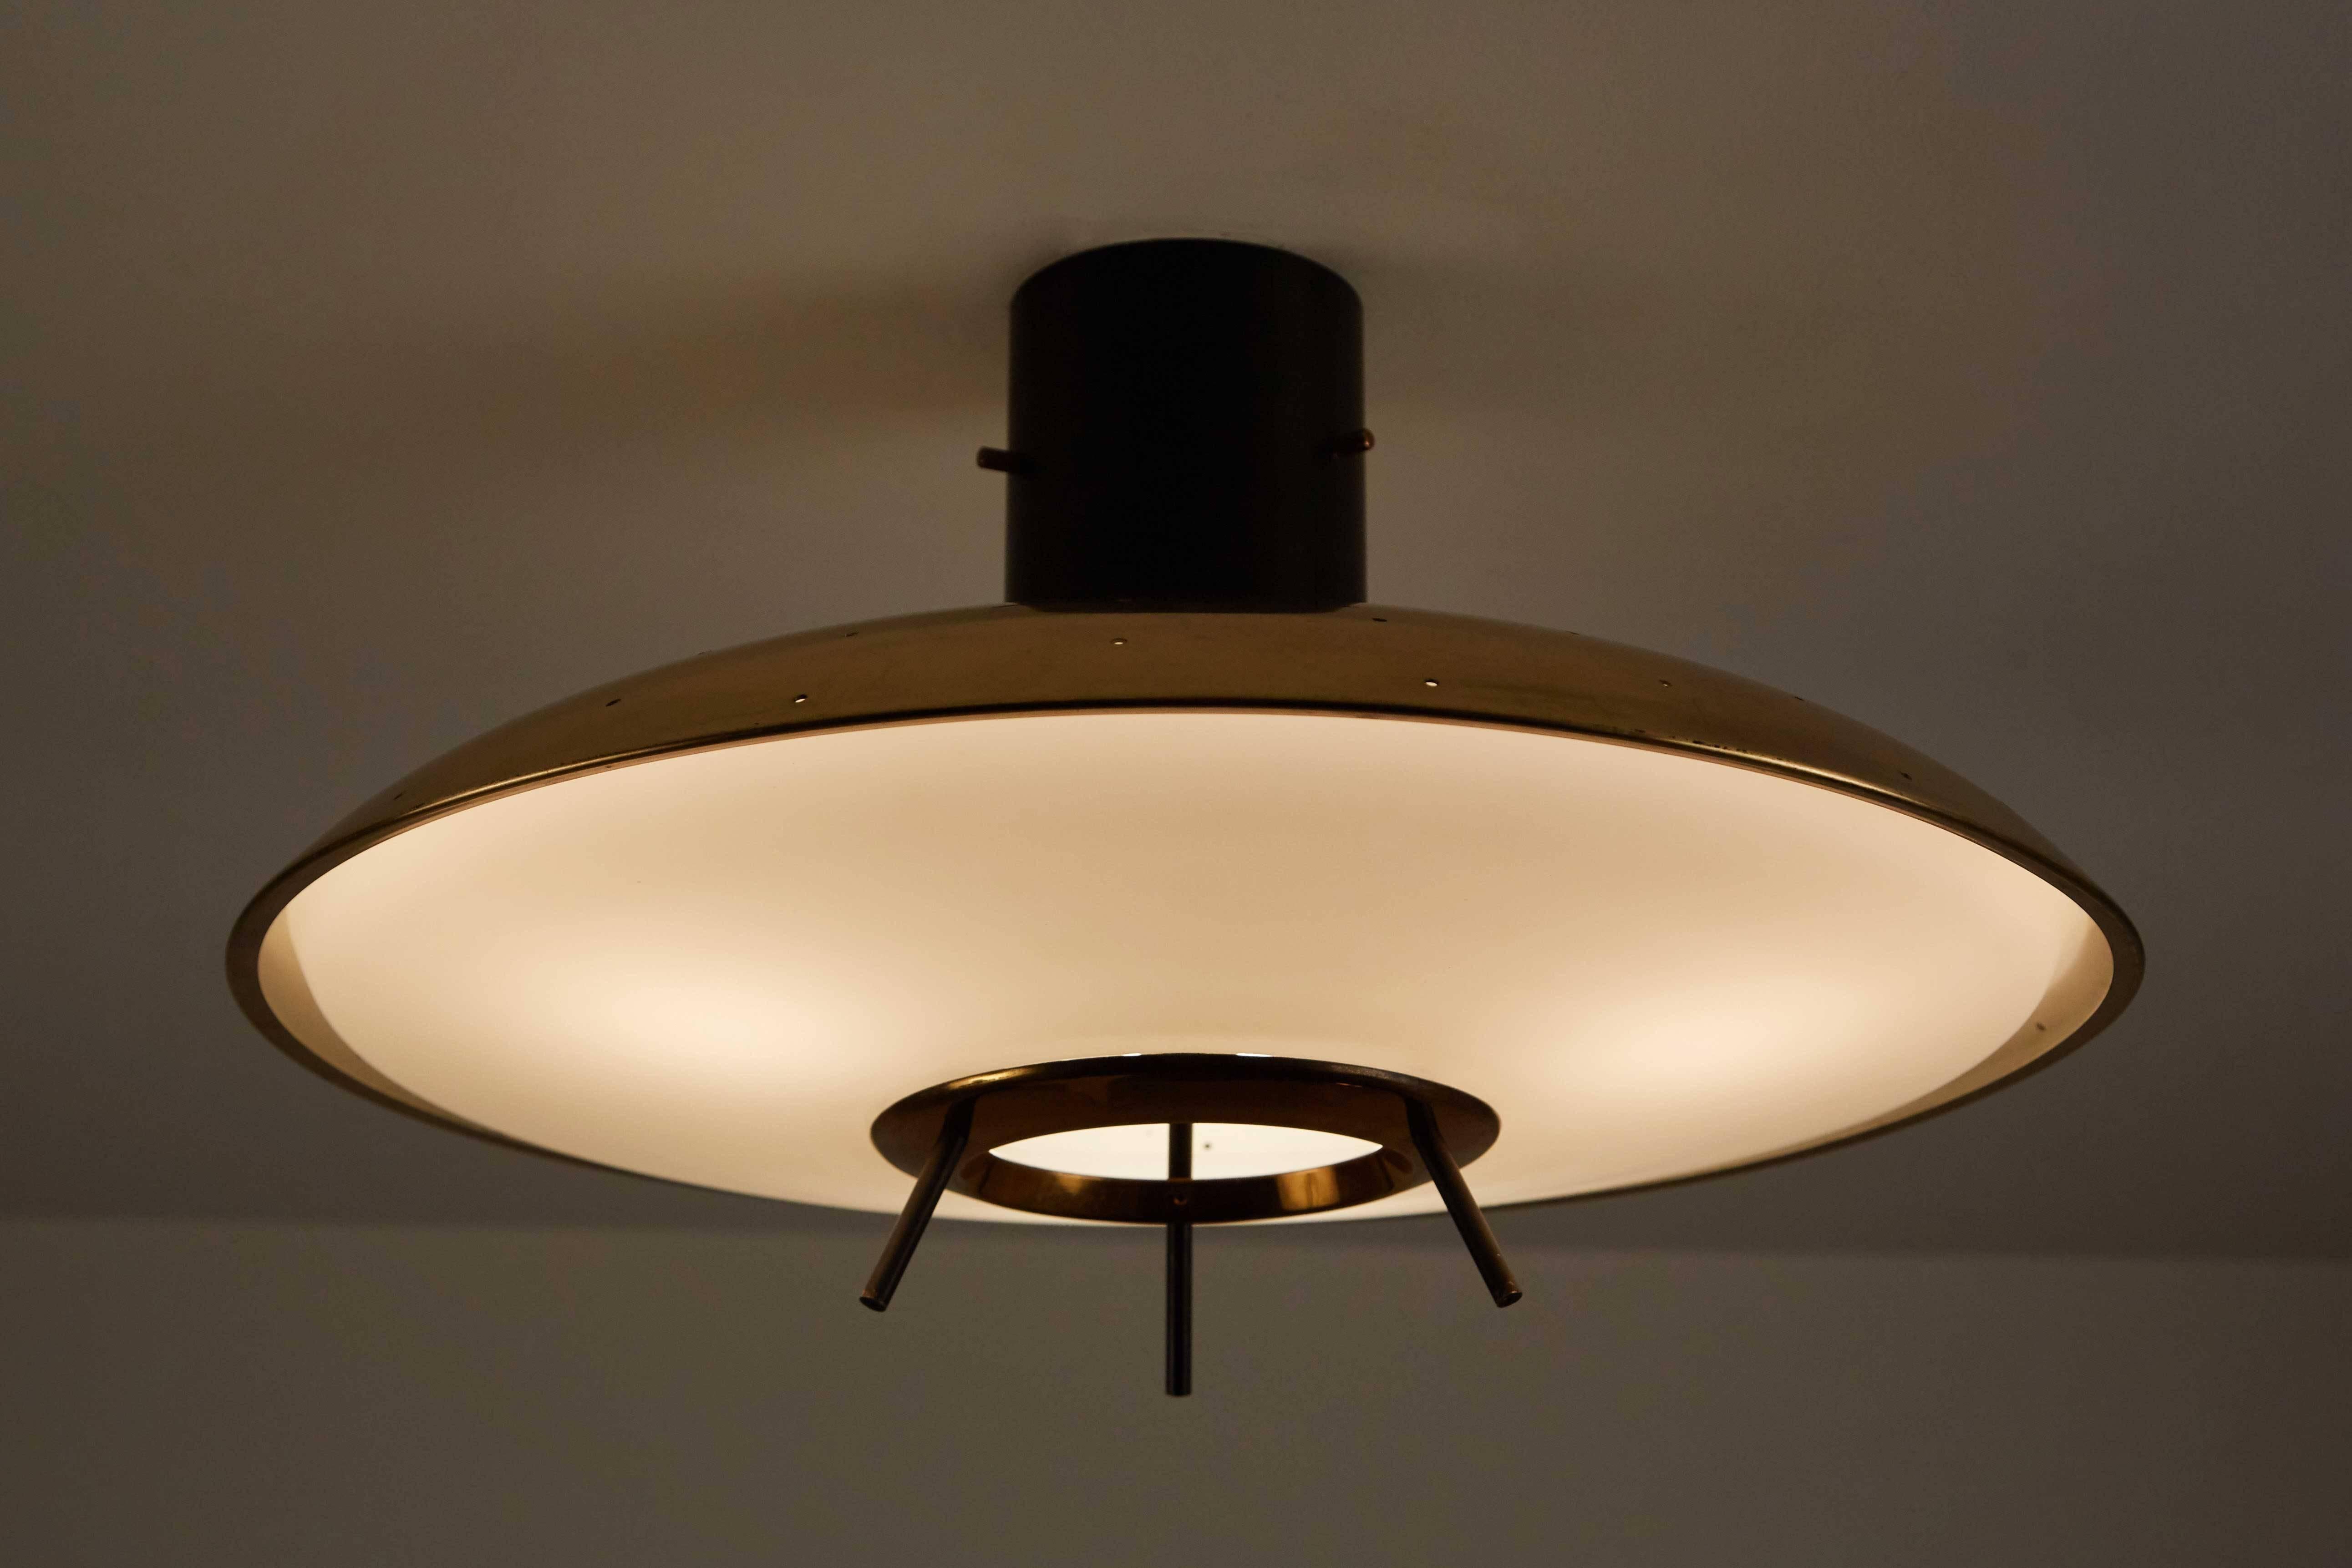 Original Stilnovo brass and satin glass flush mount ceiling light designed in Italy, circa 1950s. Wired for US junction boxes. Takes three E16 60w maximum bulbs. Retains original Stilnovo label.